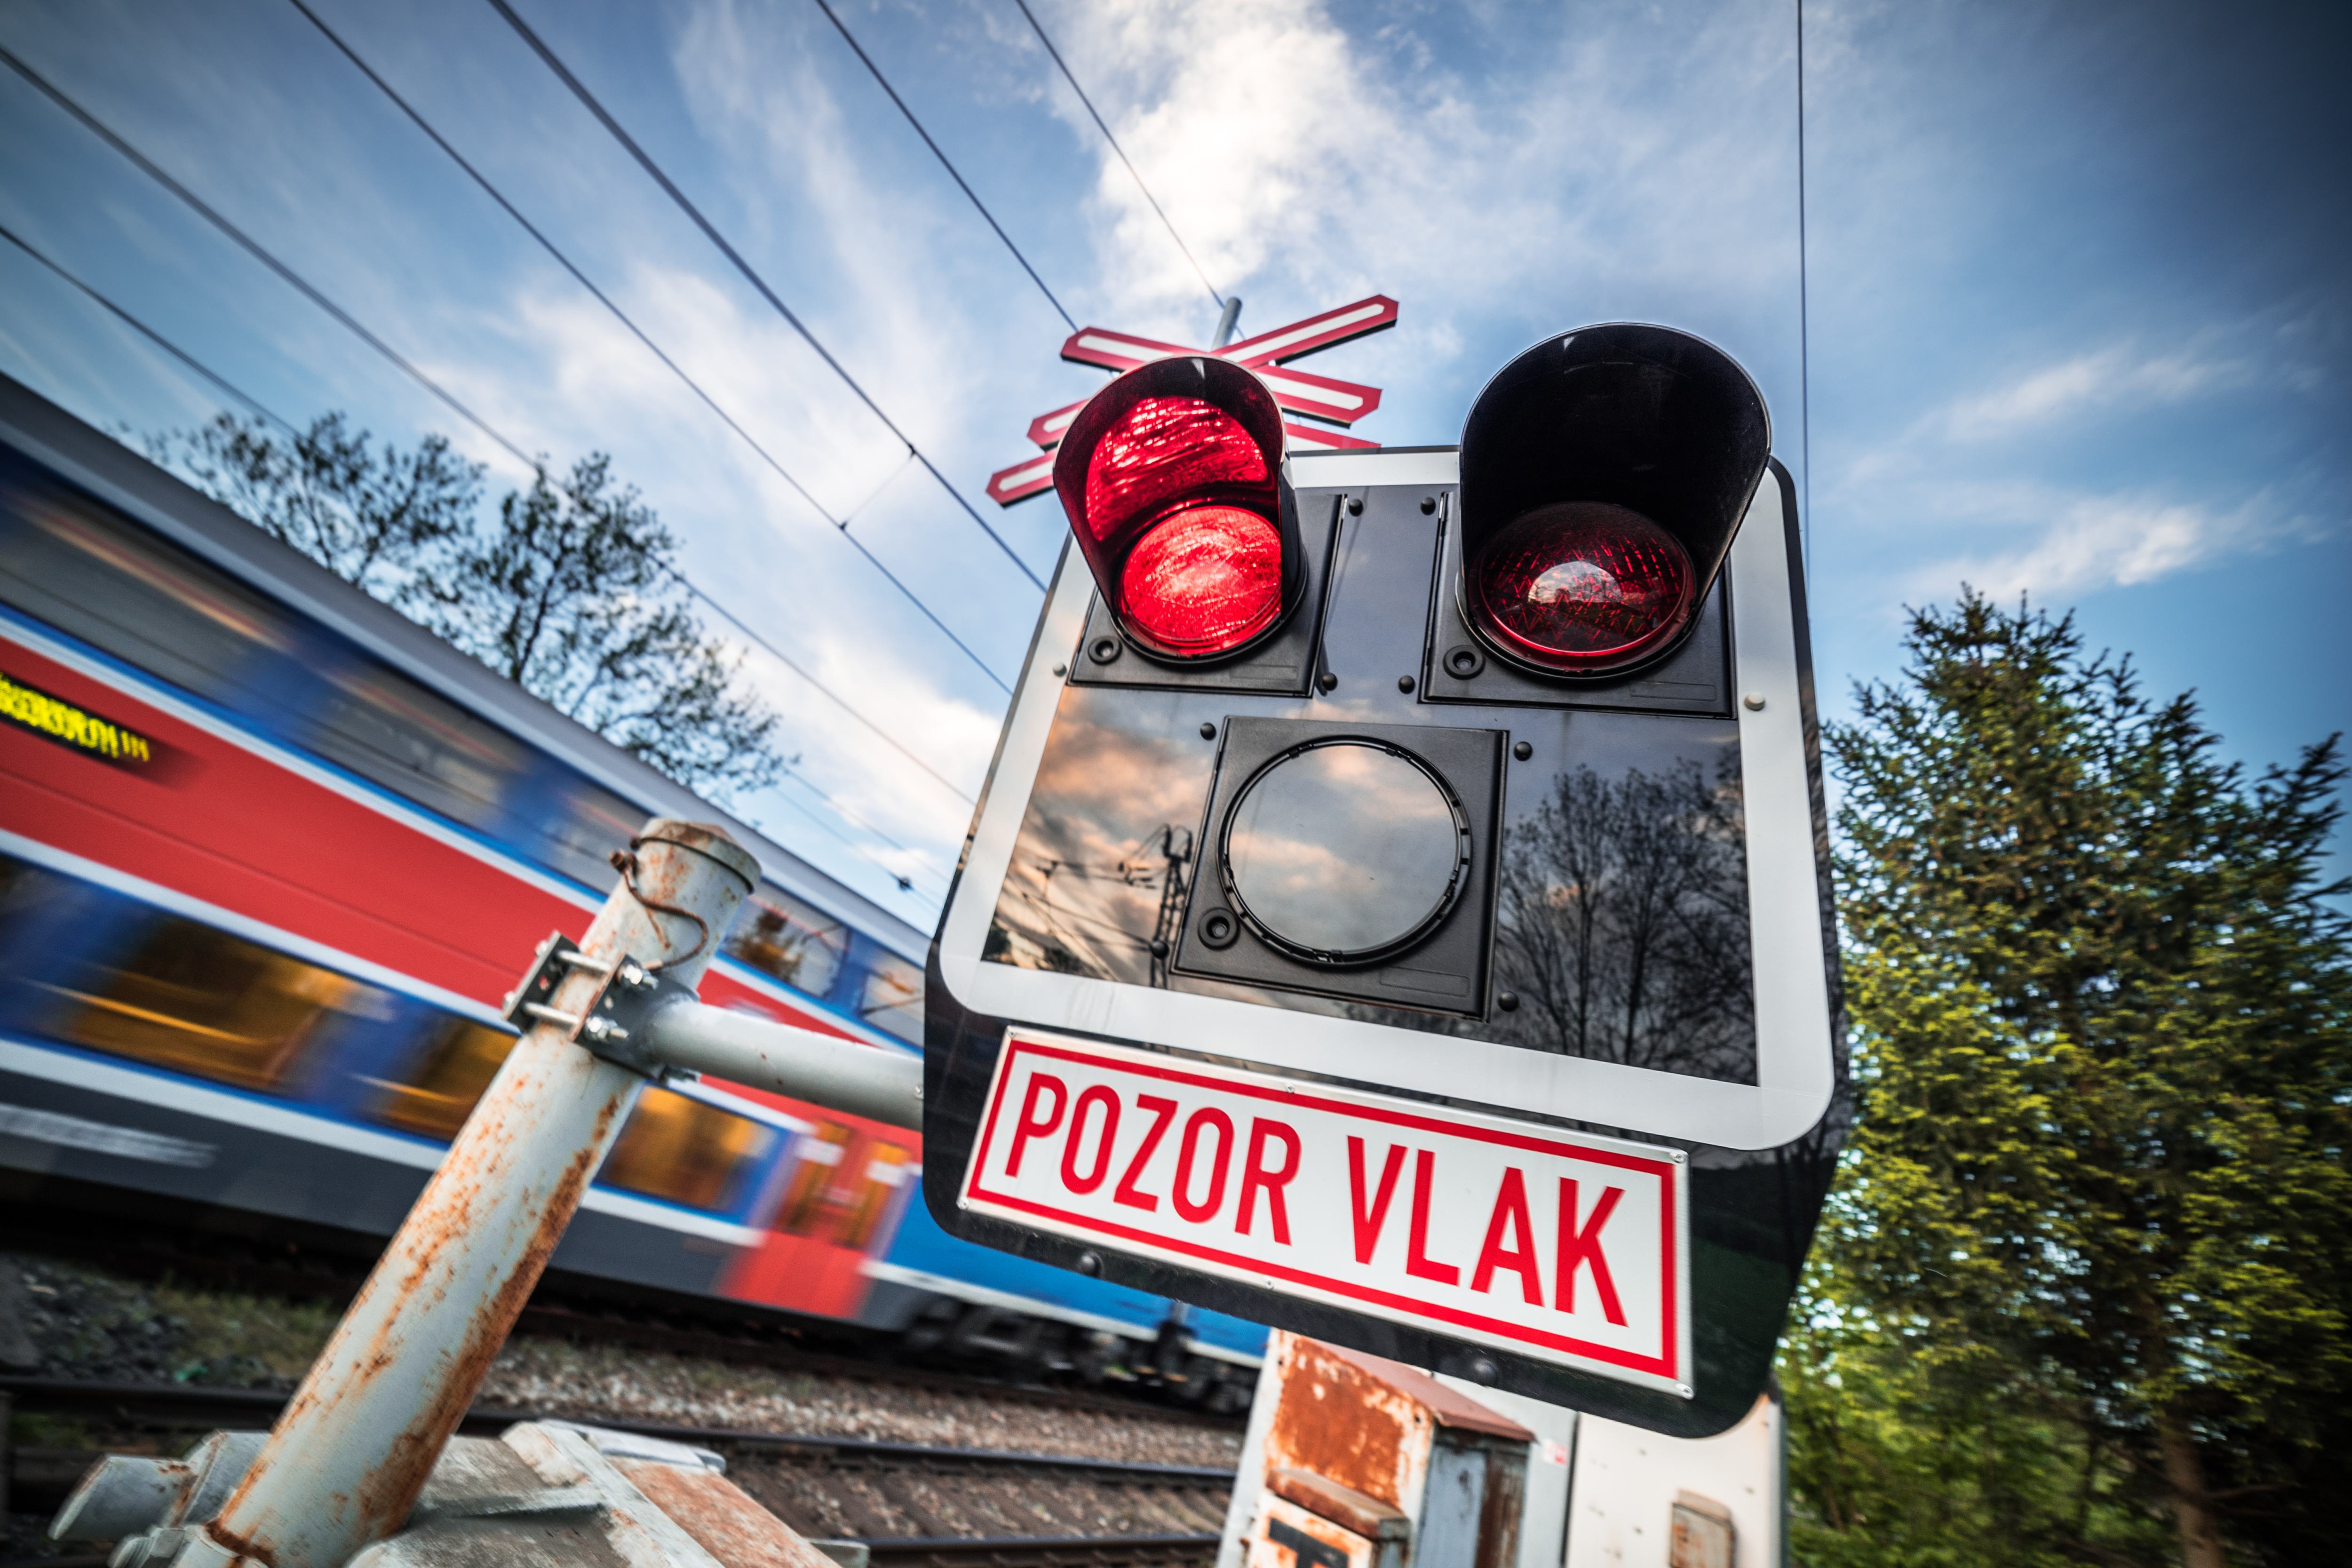 Pozor Vlak Czech Railway Crossing Sign Free Stock Photo Picjumbo